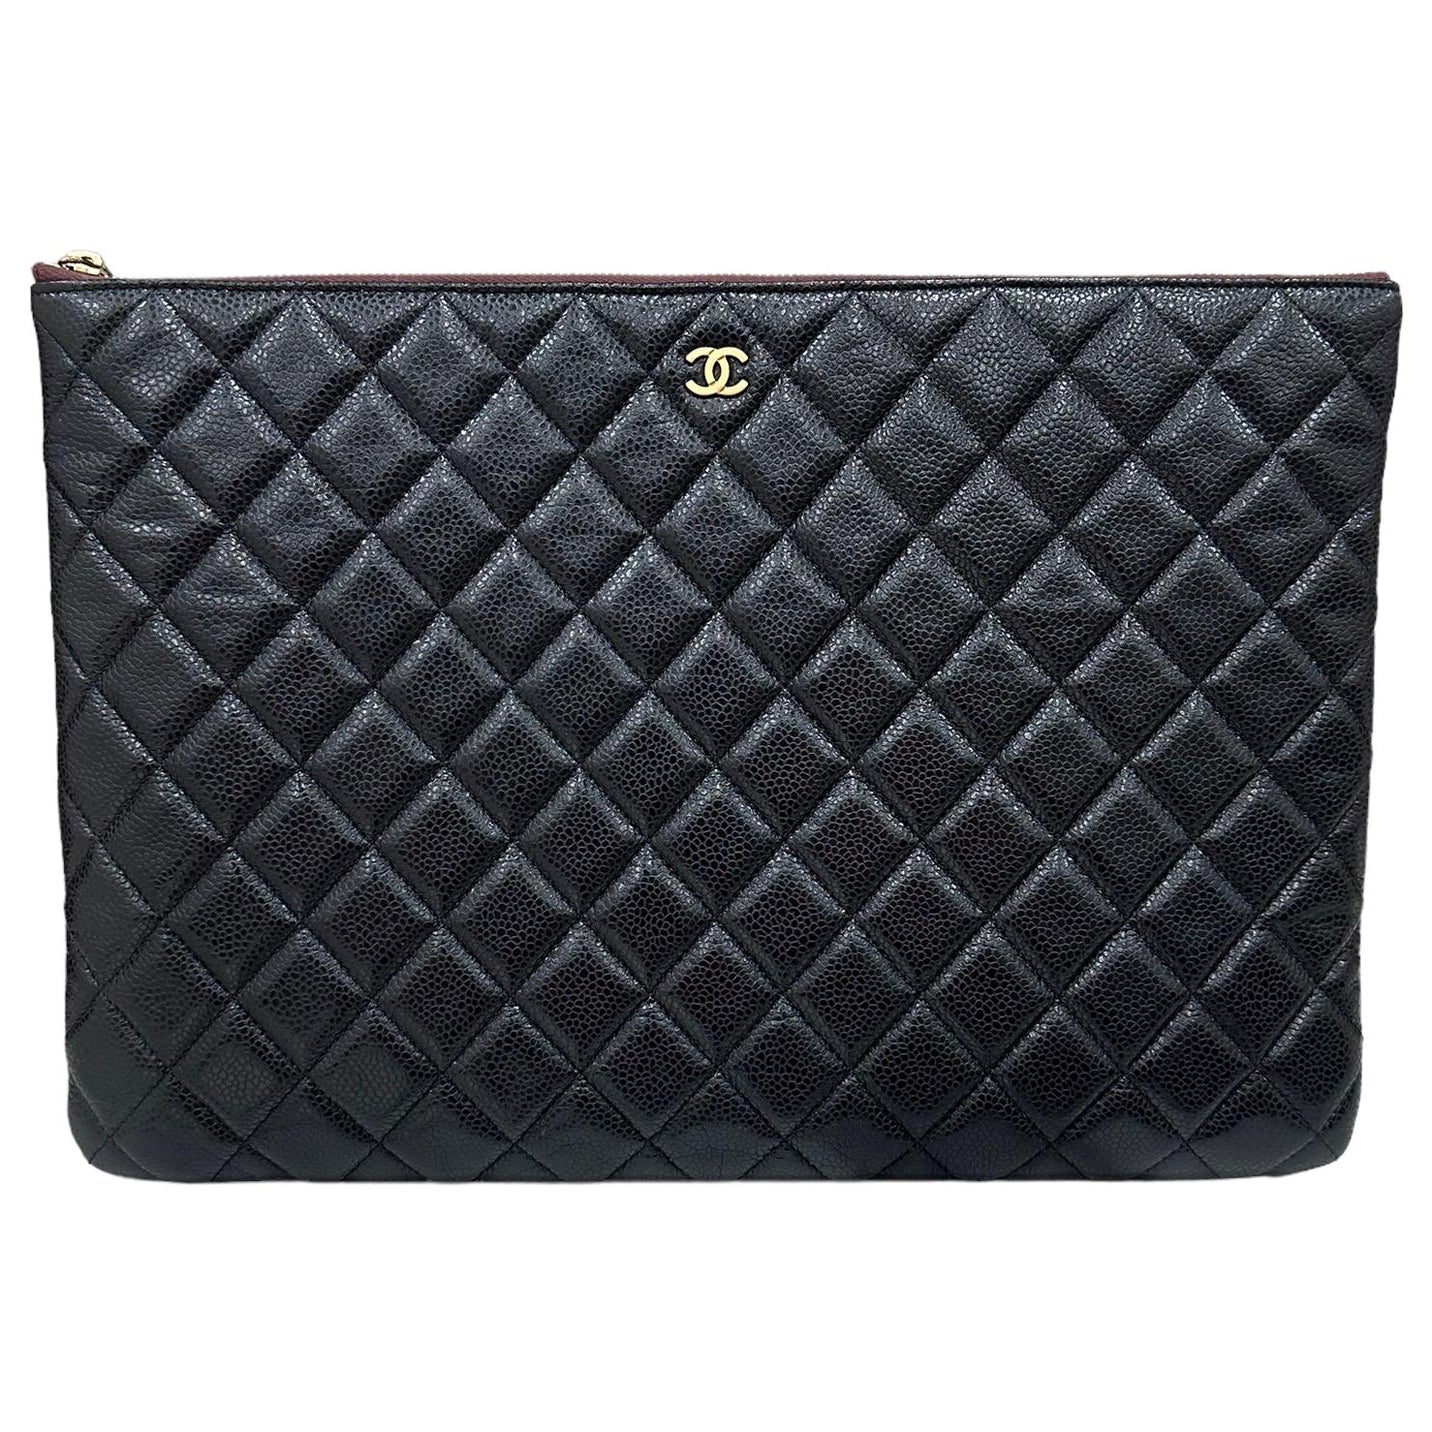 2016 Chanel Timeless Clutch Black Caviar Leather 